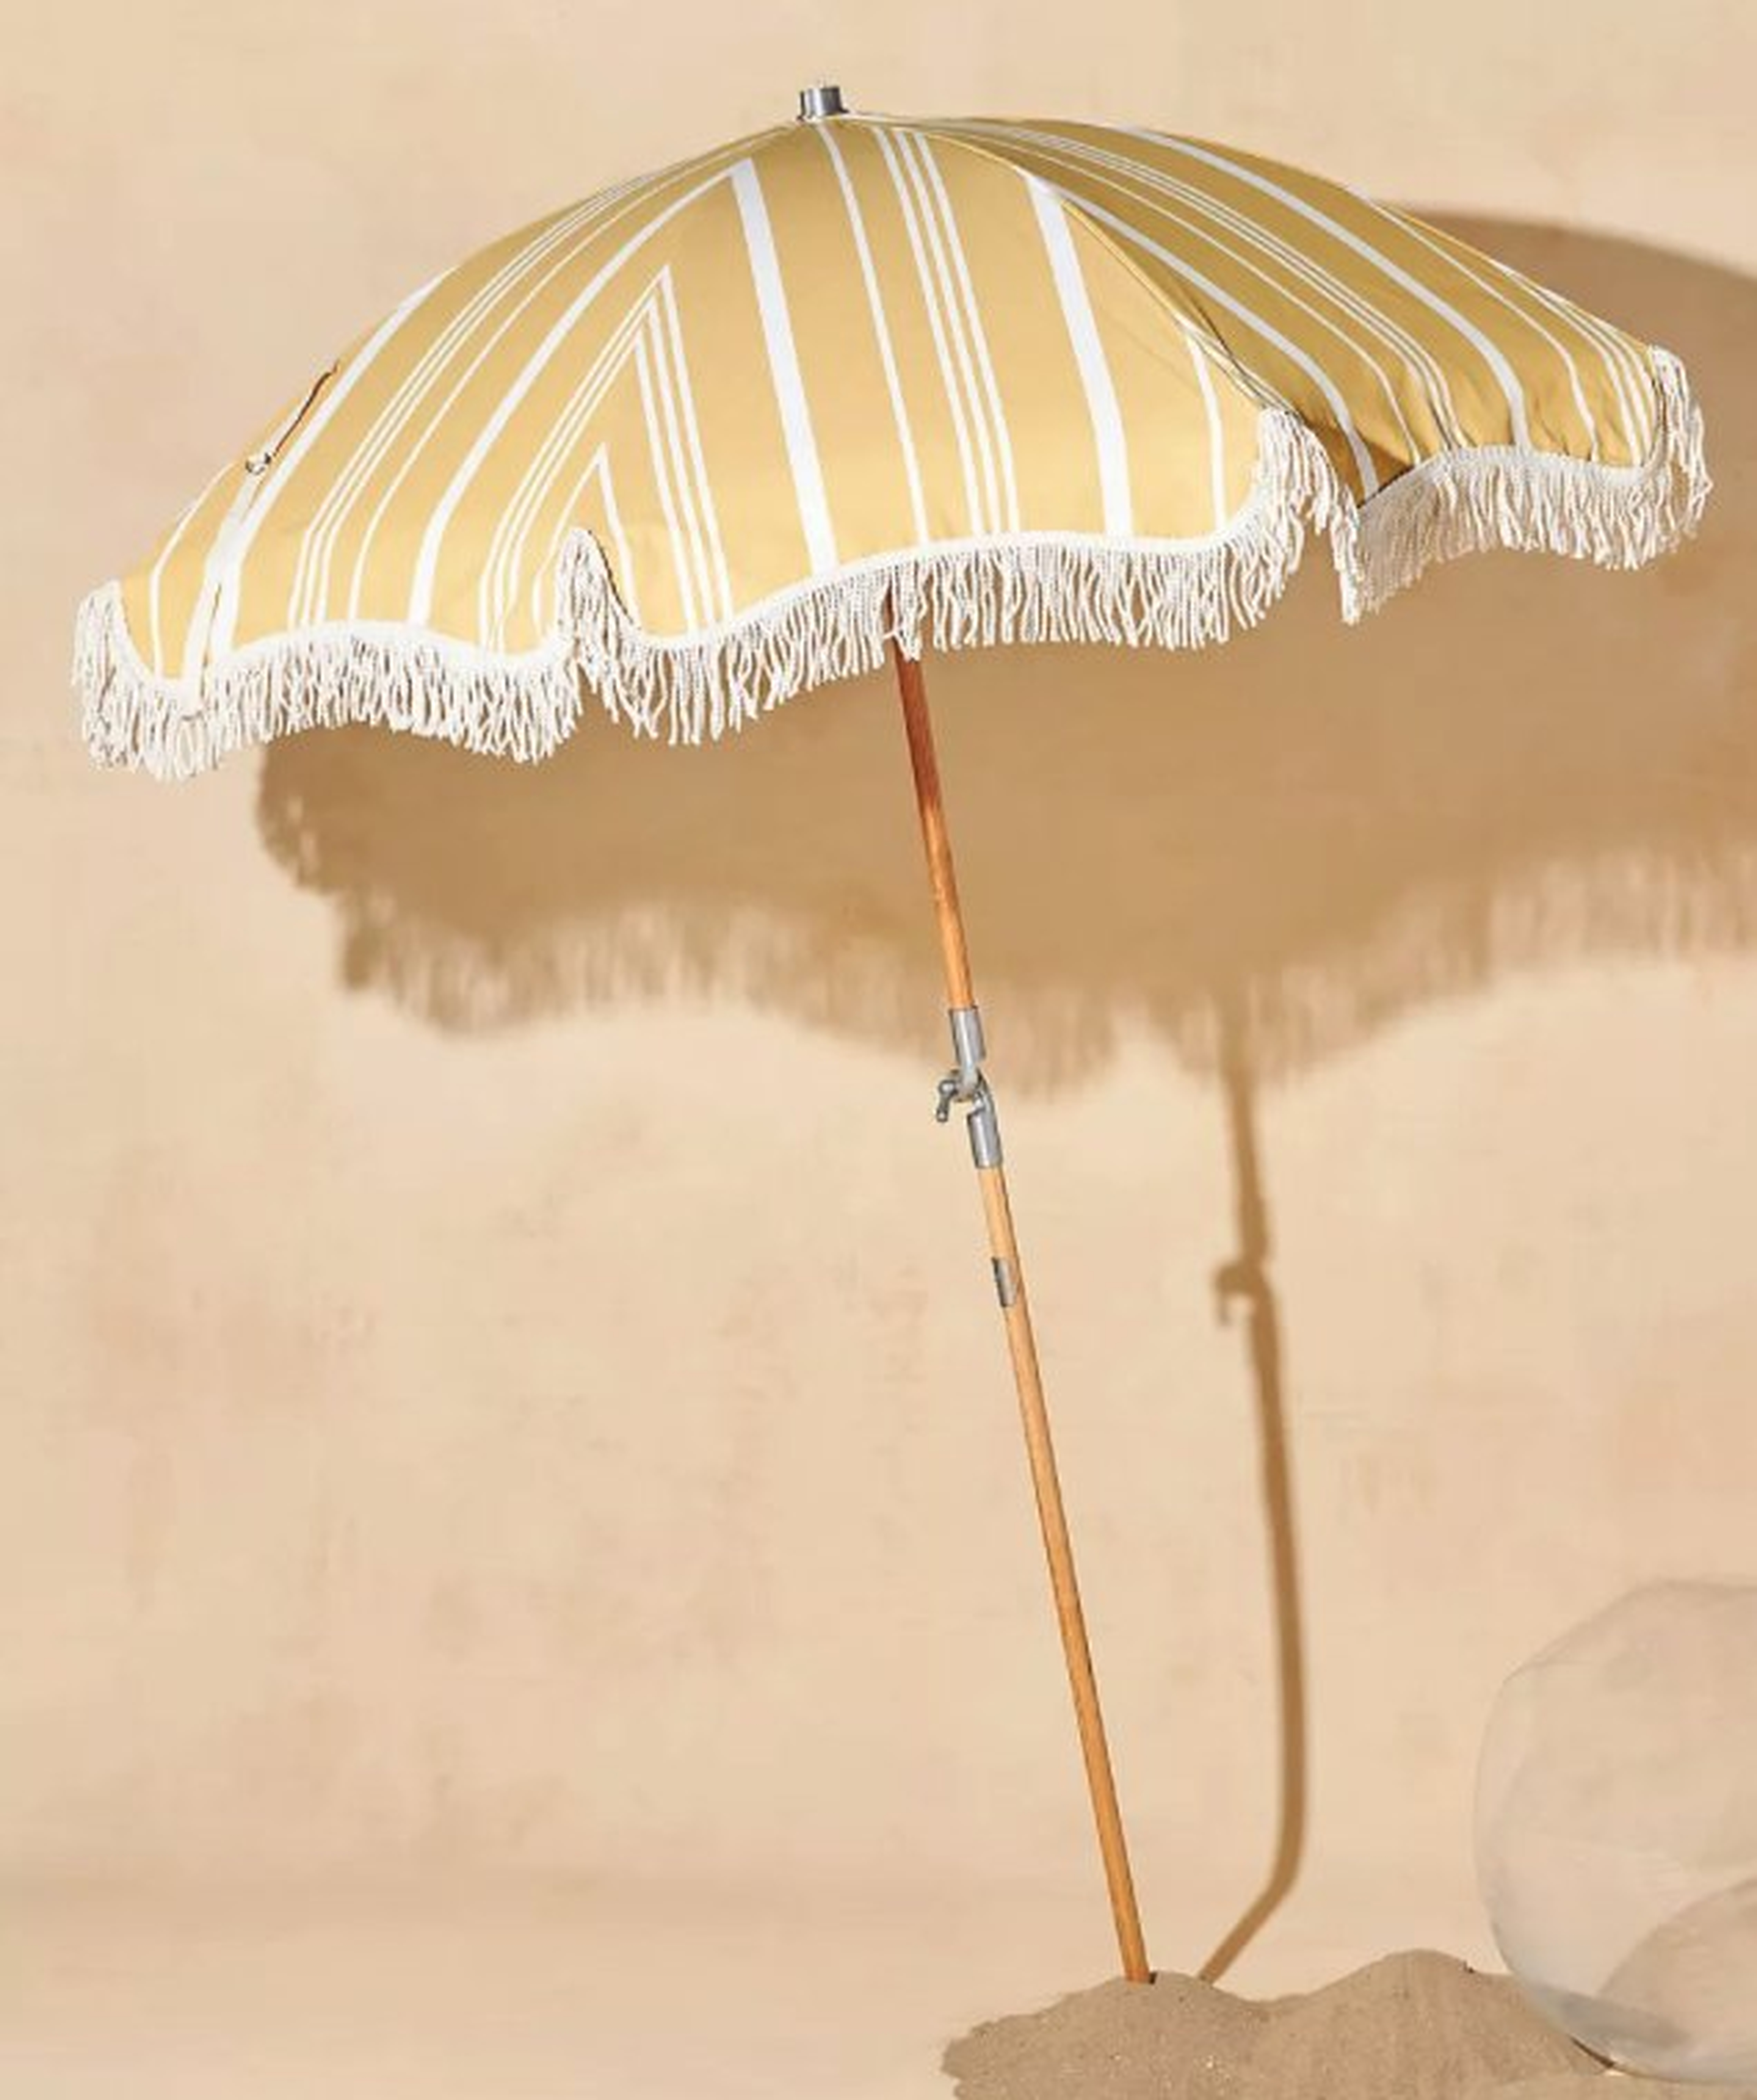 Soleil Beach Umbrella - Anthropologie